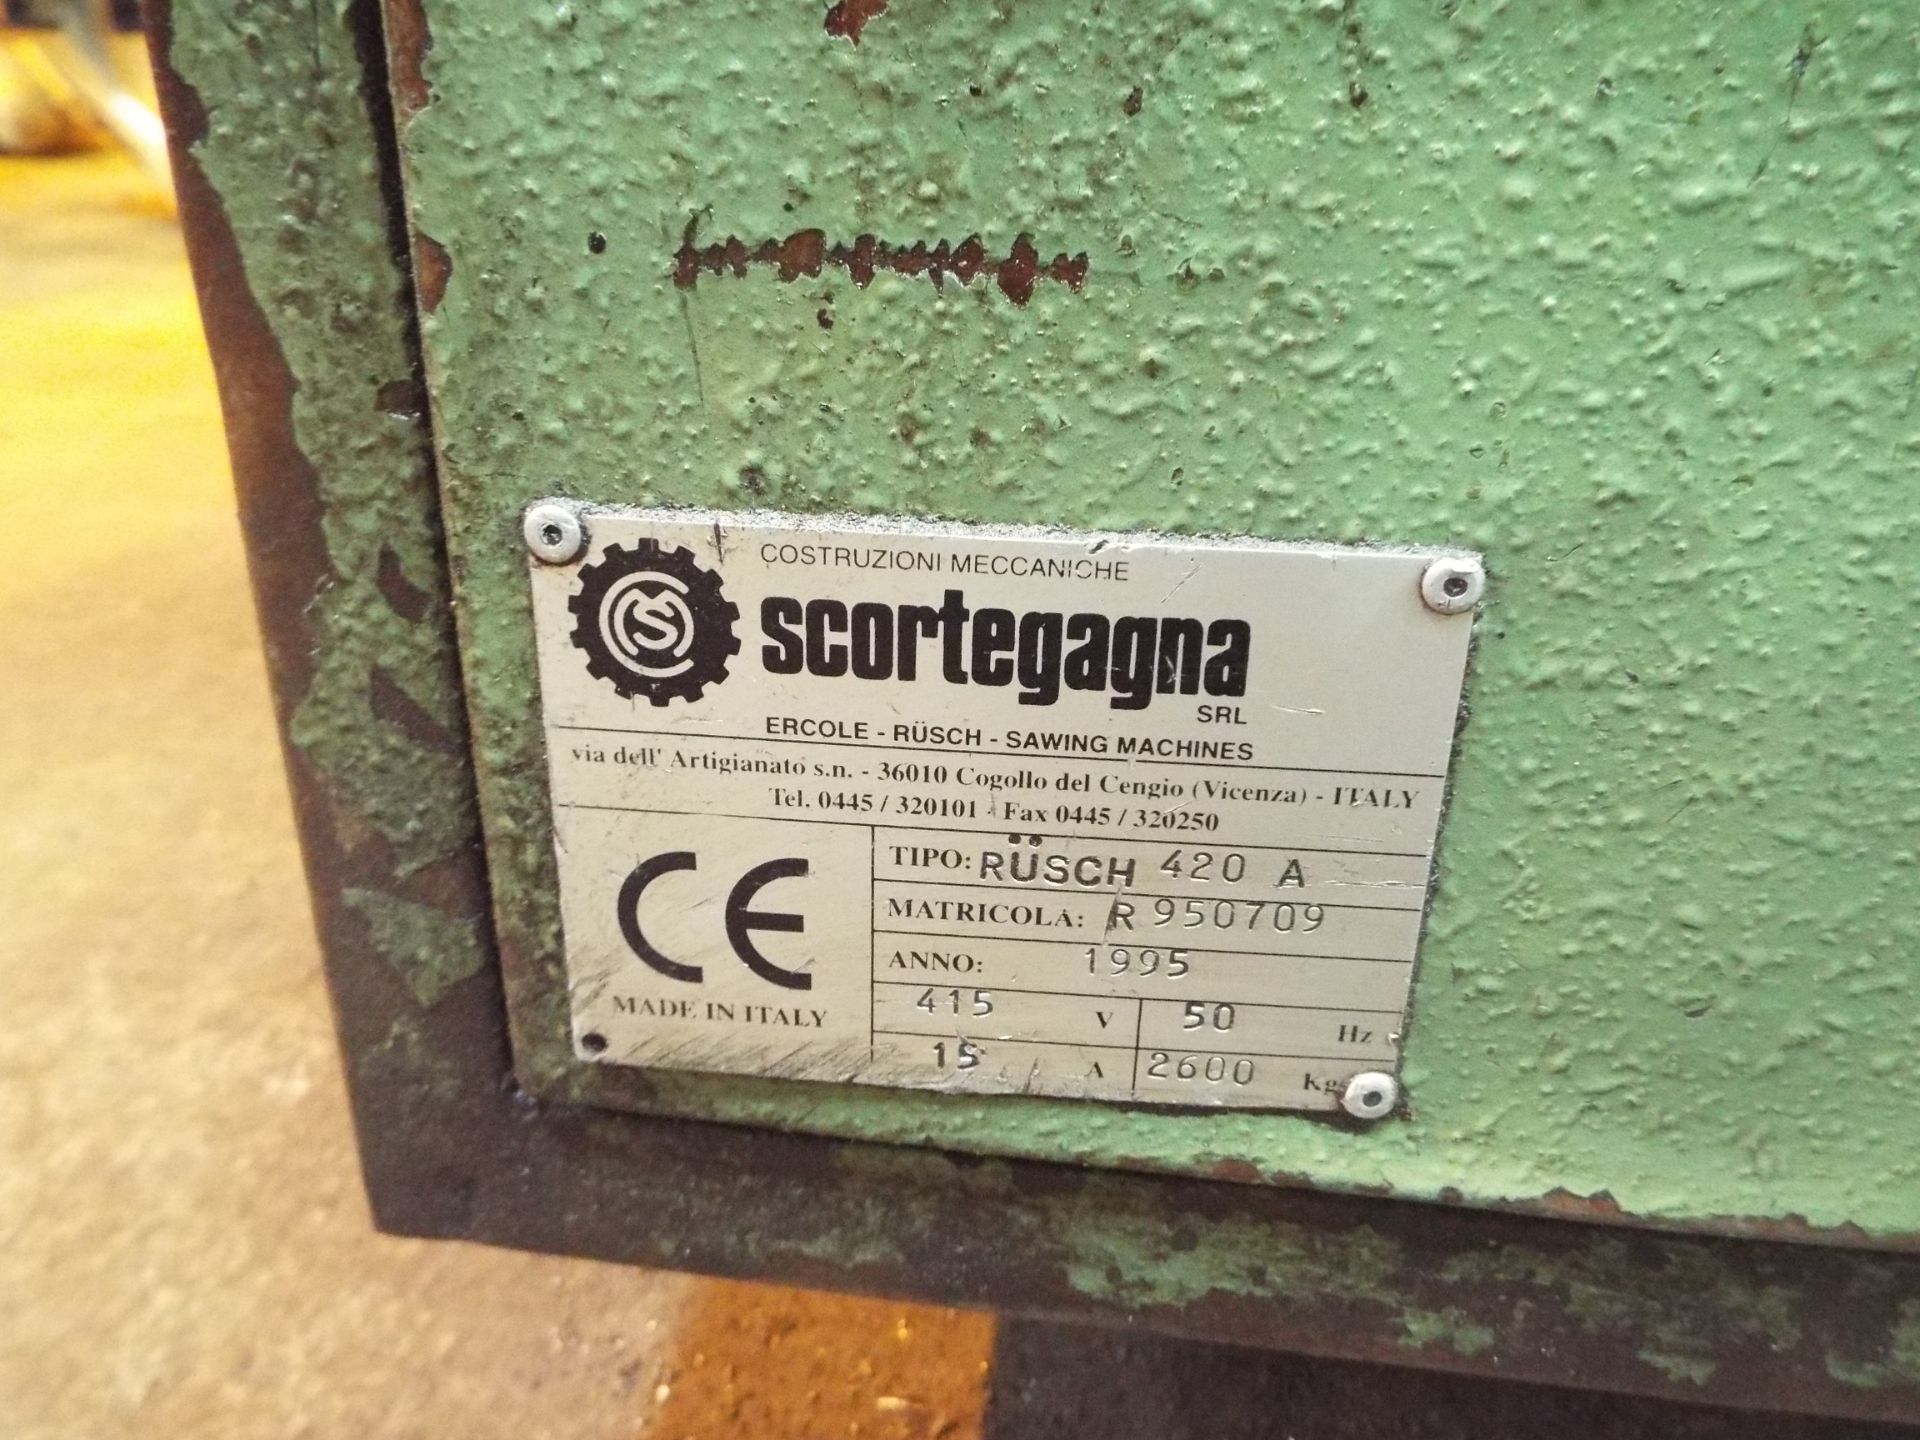 C M Scortegagna Rusch 420A Hydraulic Sawing Centre cw Spare Blades. - Image 5 of 11